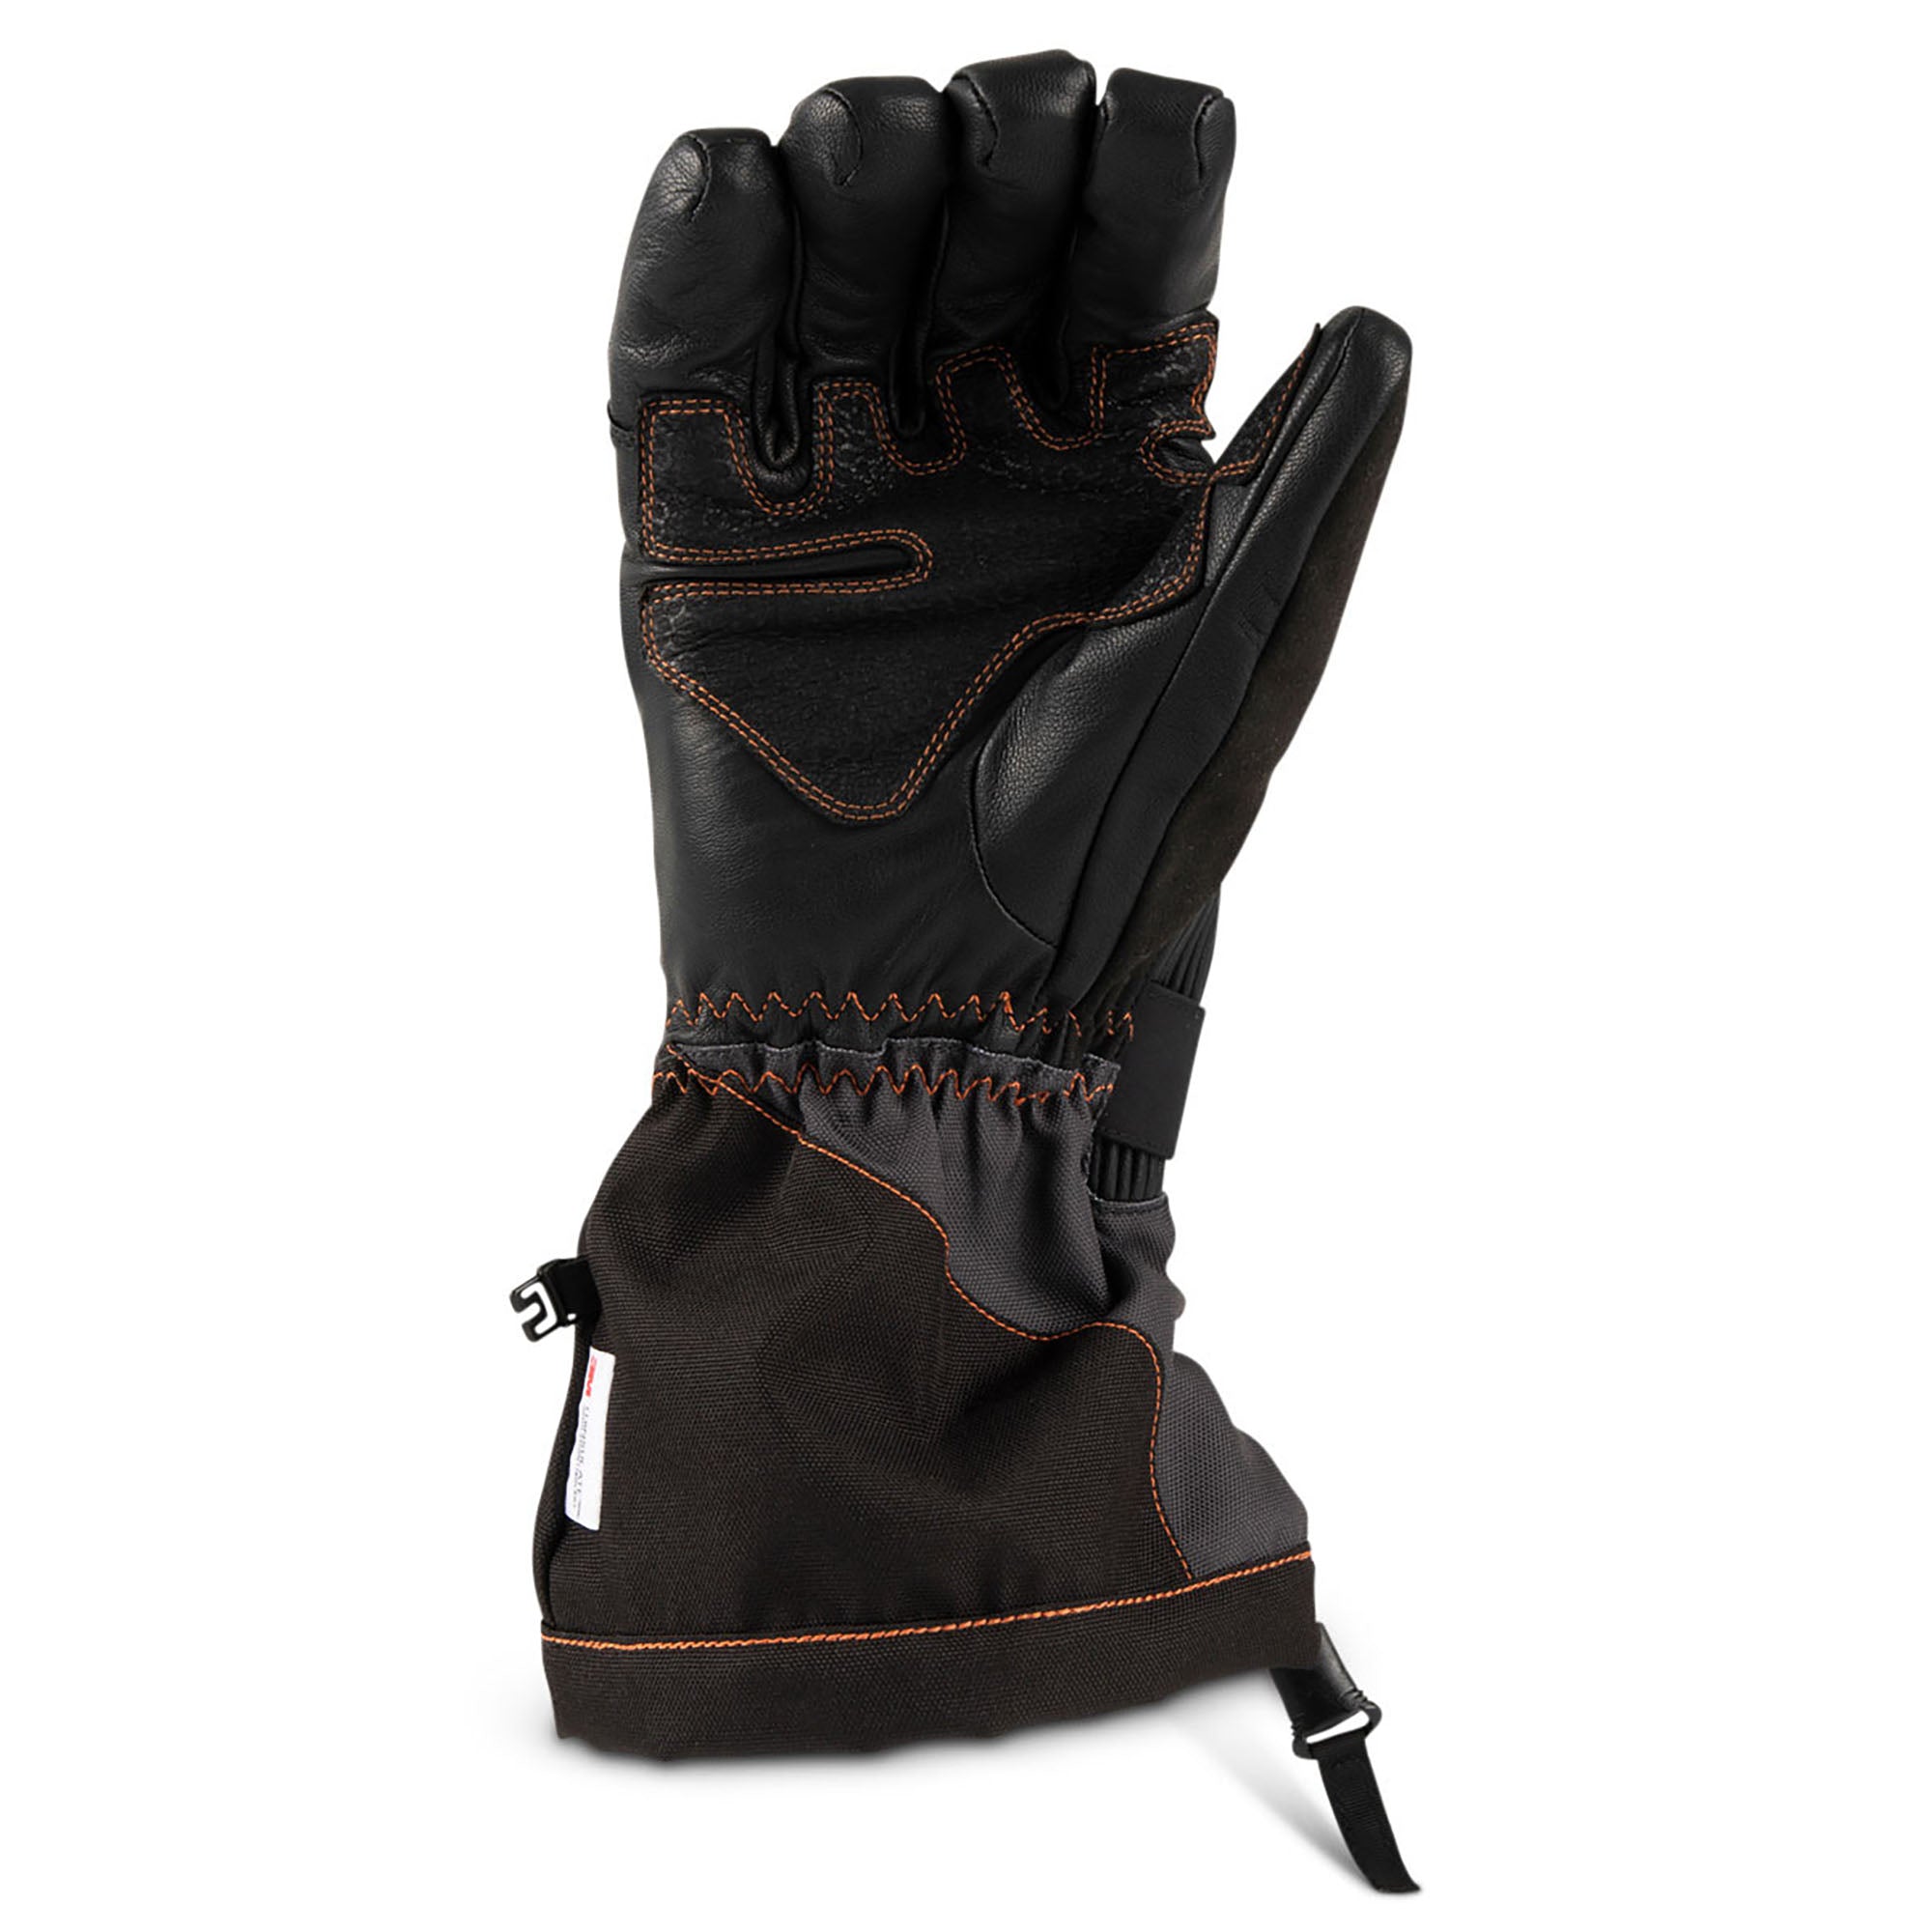 Genuine OEM 509 Range Gloves